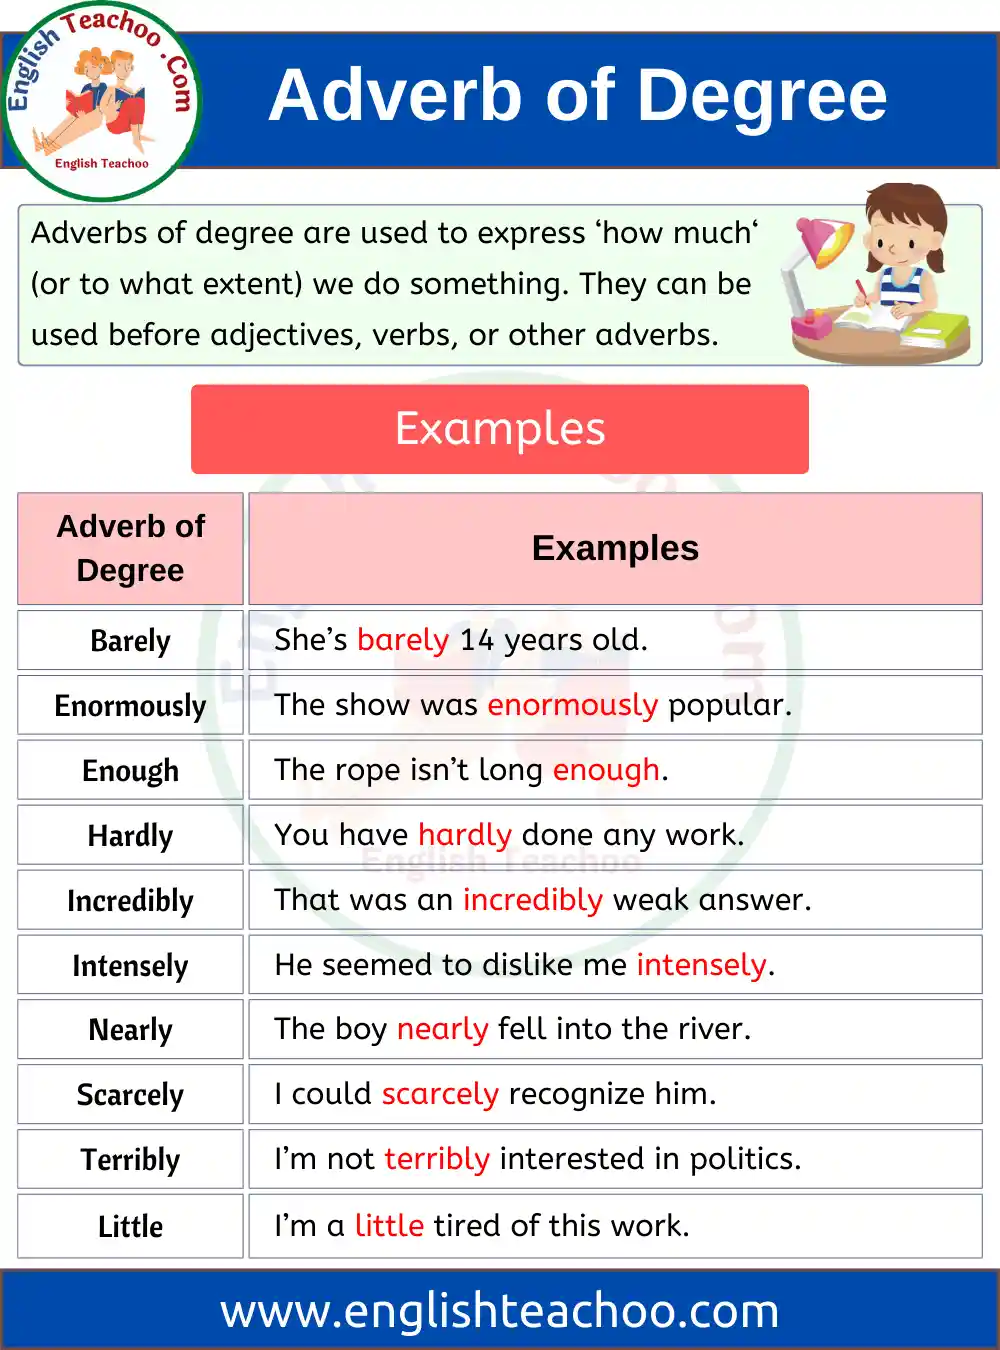 adverb-of-degree-examples-in-sentences-englishteachoo